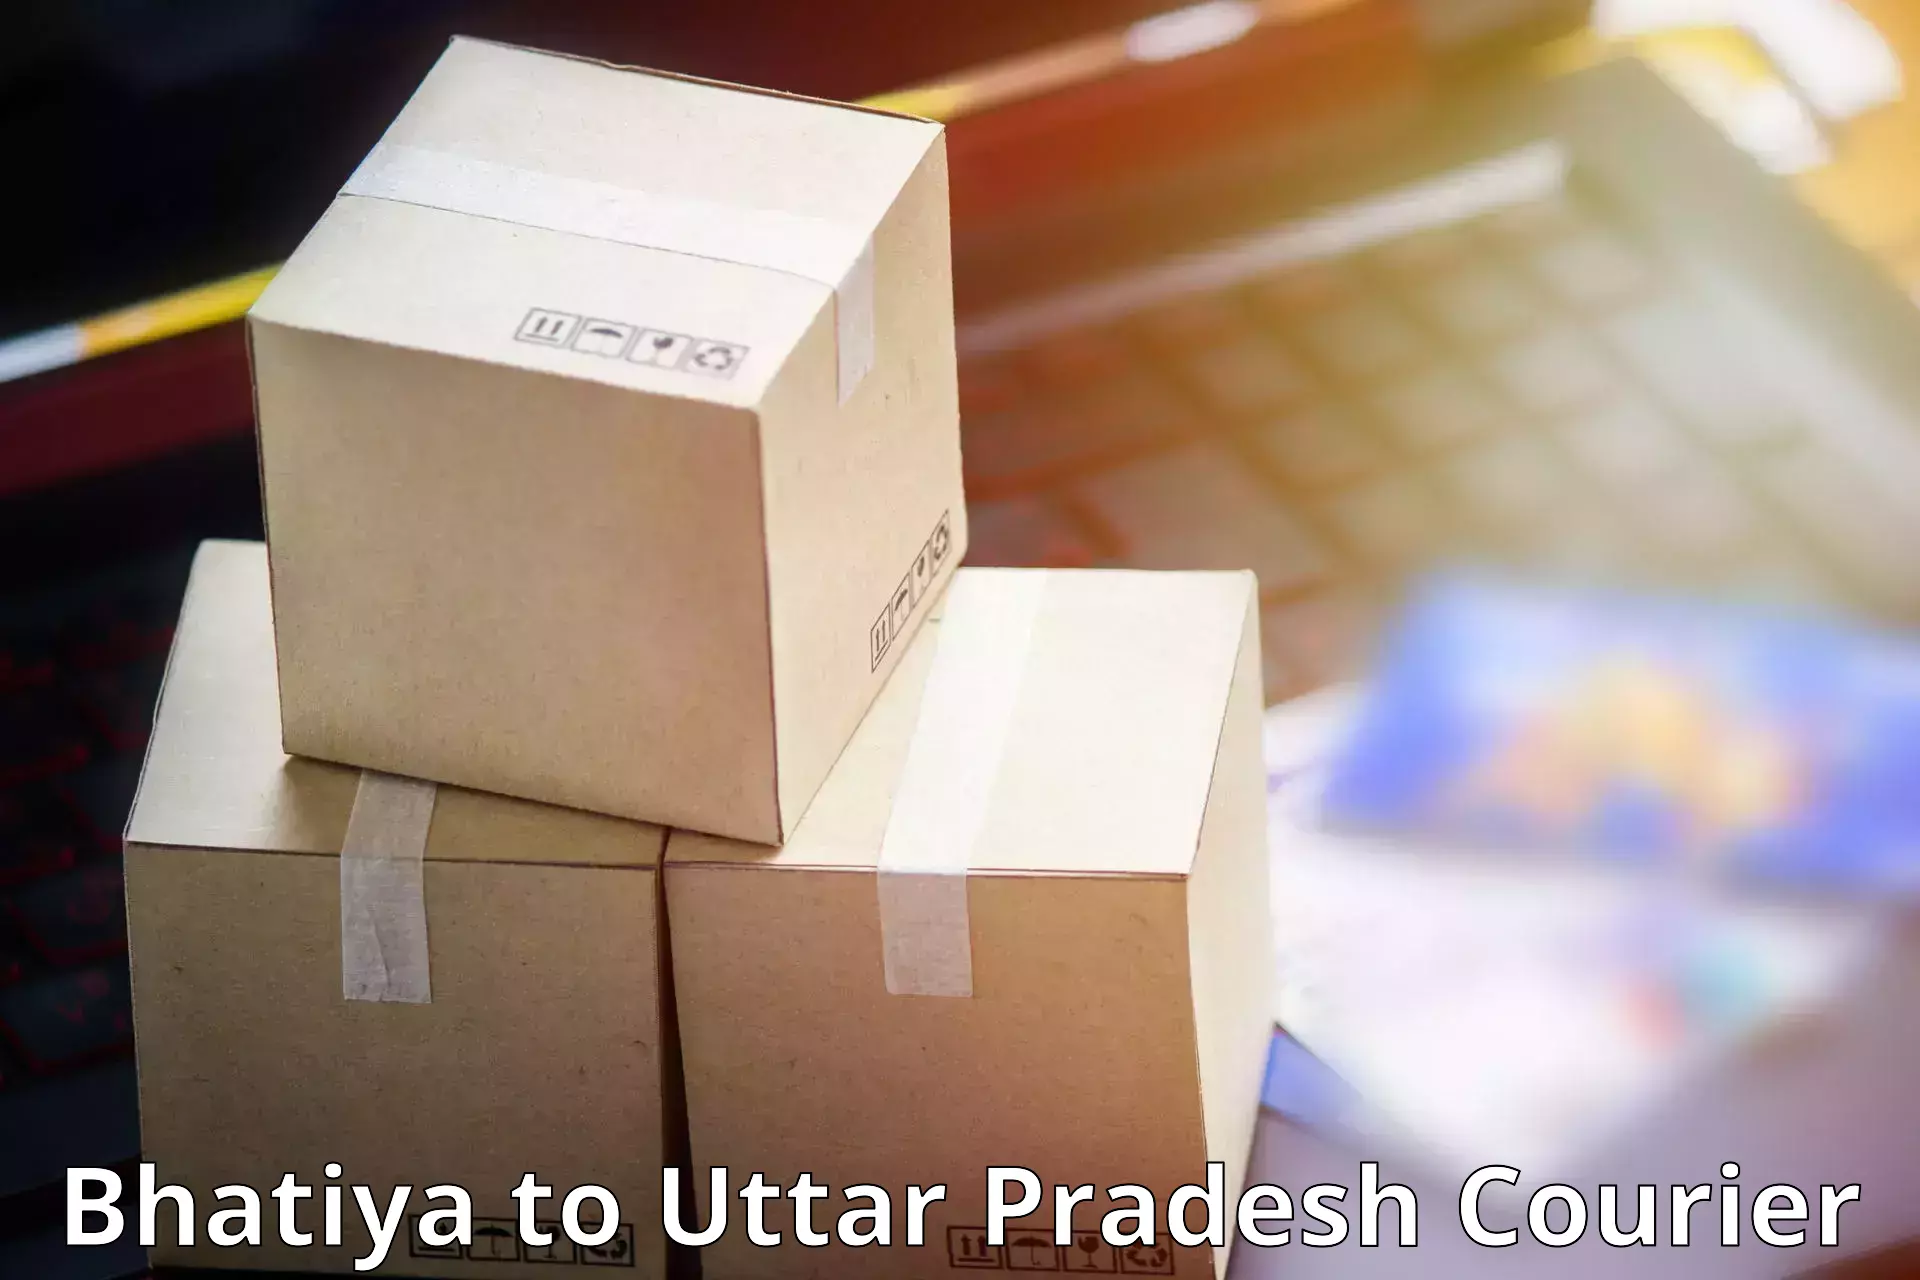 Package forwarding Bhatiya to Kanpur